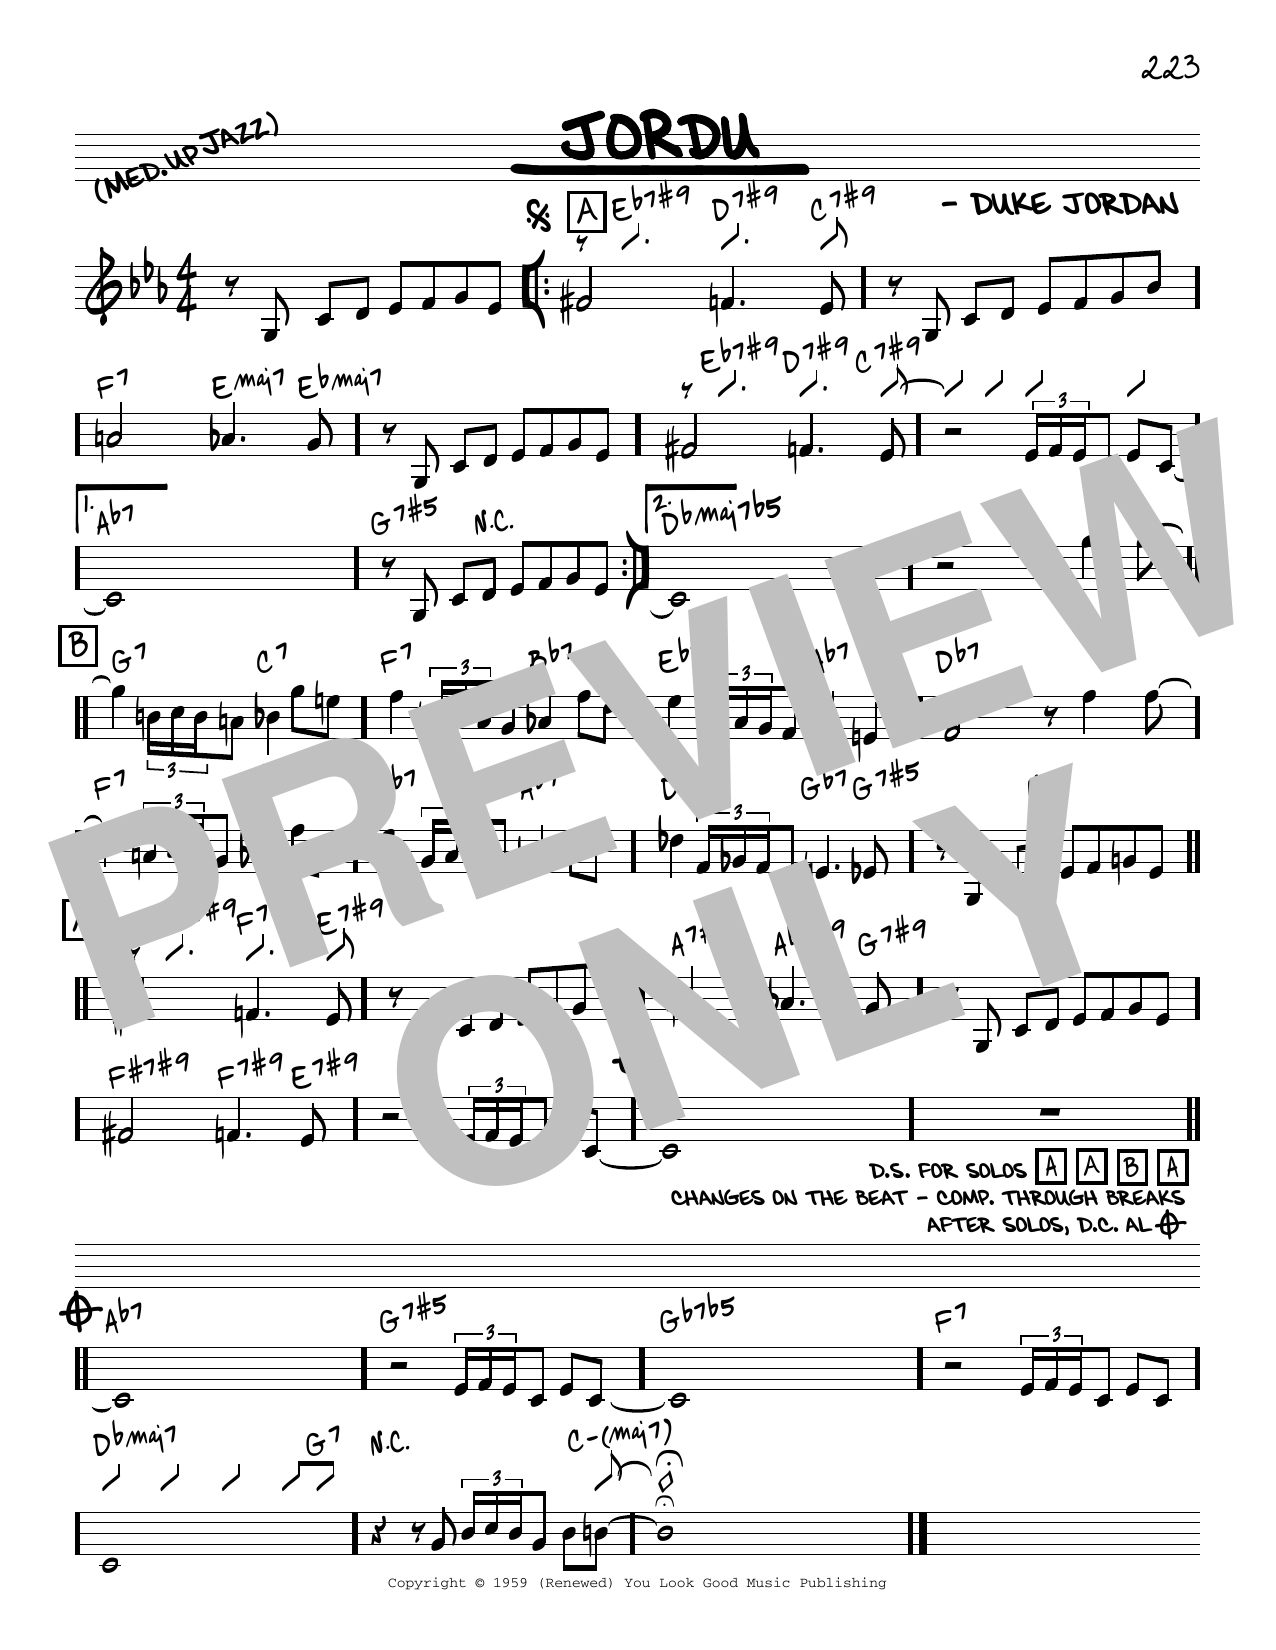 Download Duke Jordan Jordu [Reharmonized version] (arr. Jack Grassel) Sheet Music and learn how to play Real Book – Melody & Chords PDF digital score in minutes